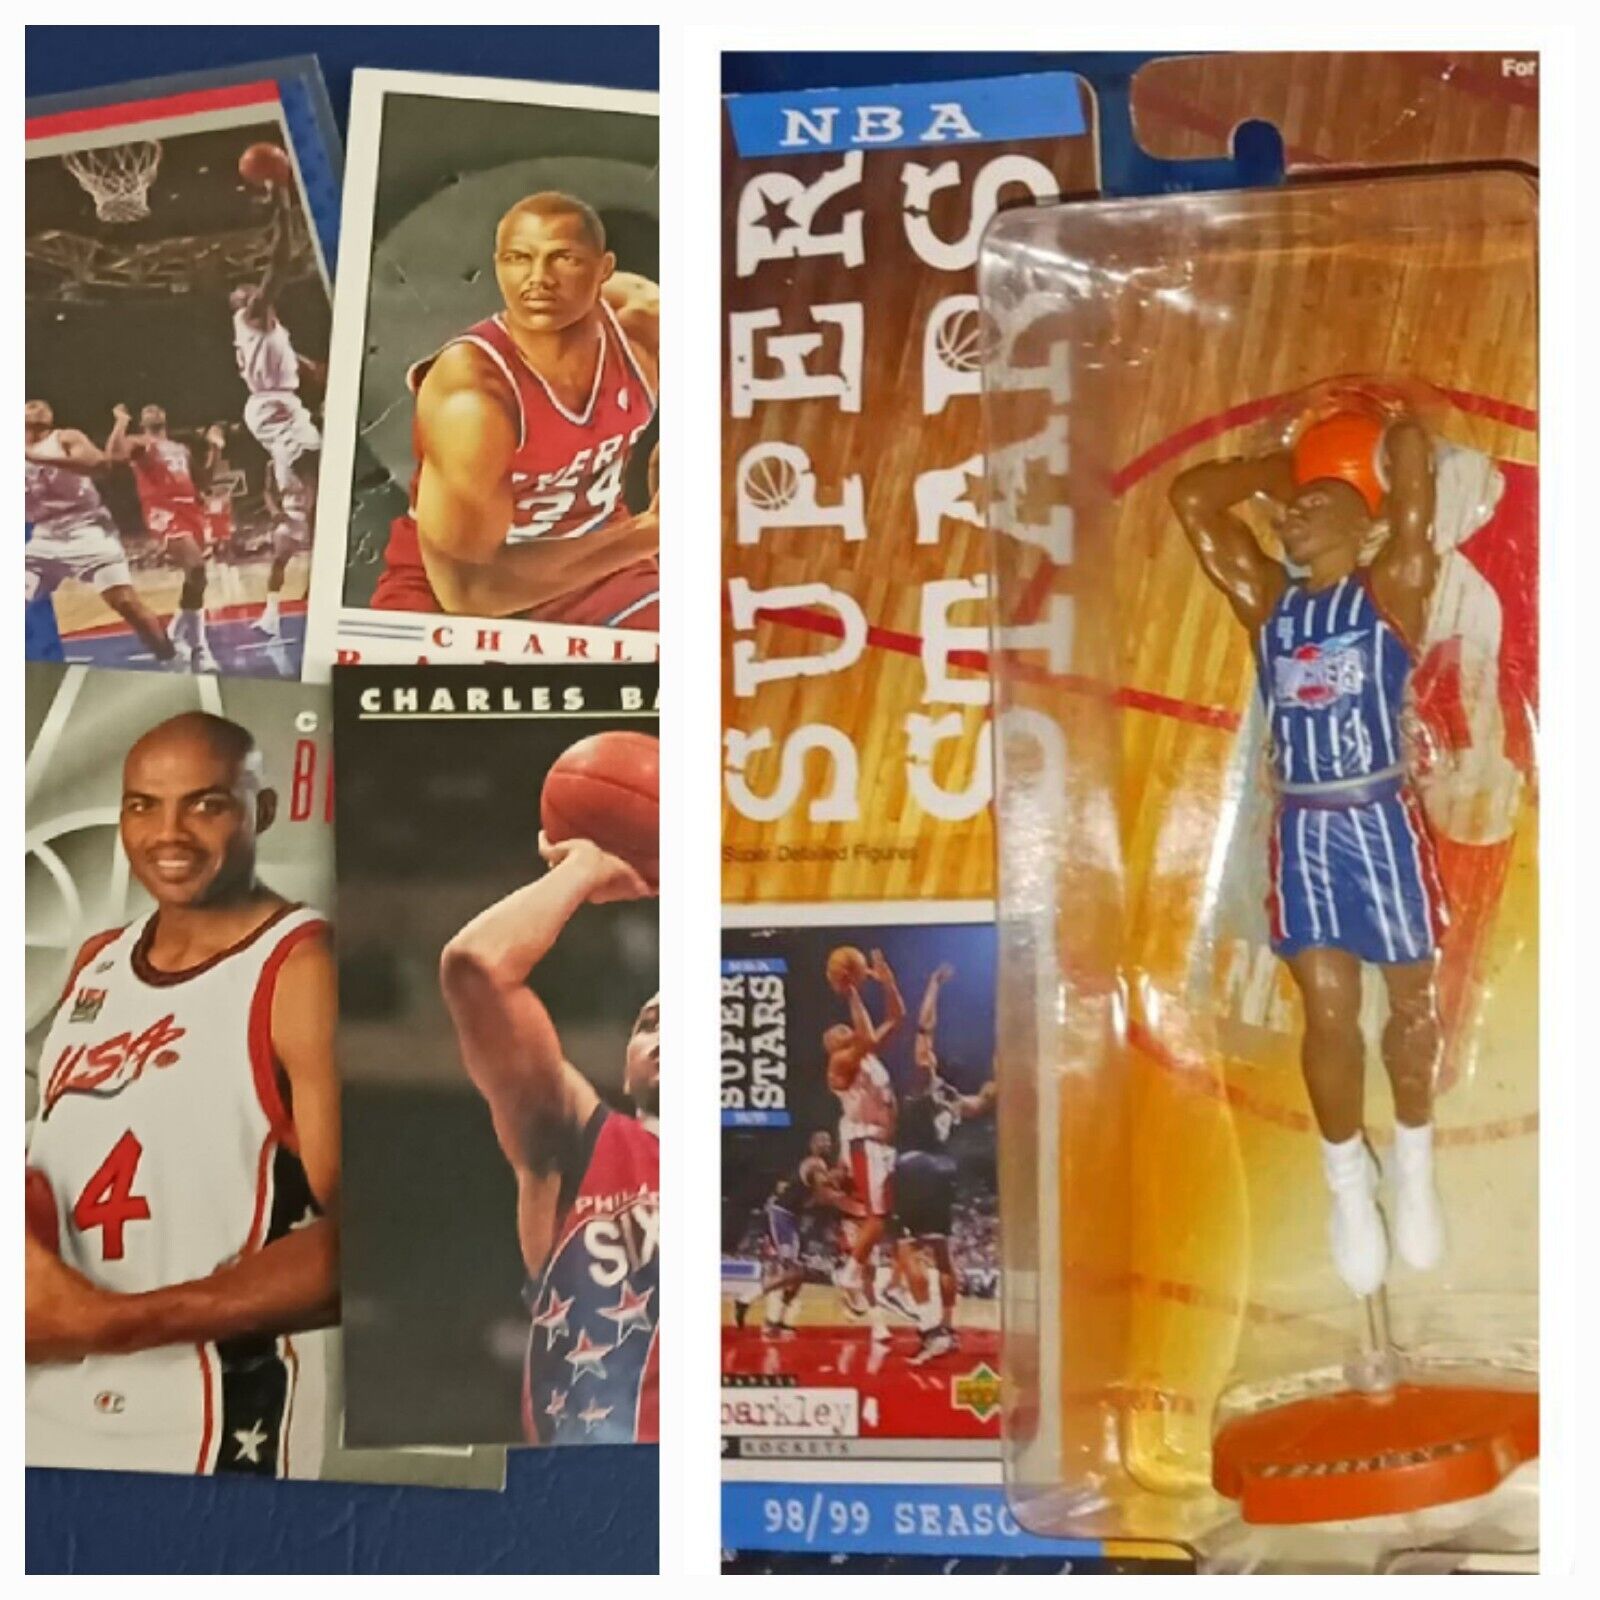 1998-99 NBA SUPER STARS CHARLES BARKLEY LIVING LEGENDS + BARKLEY BONUS CARDS.